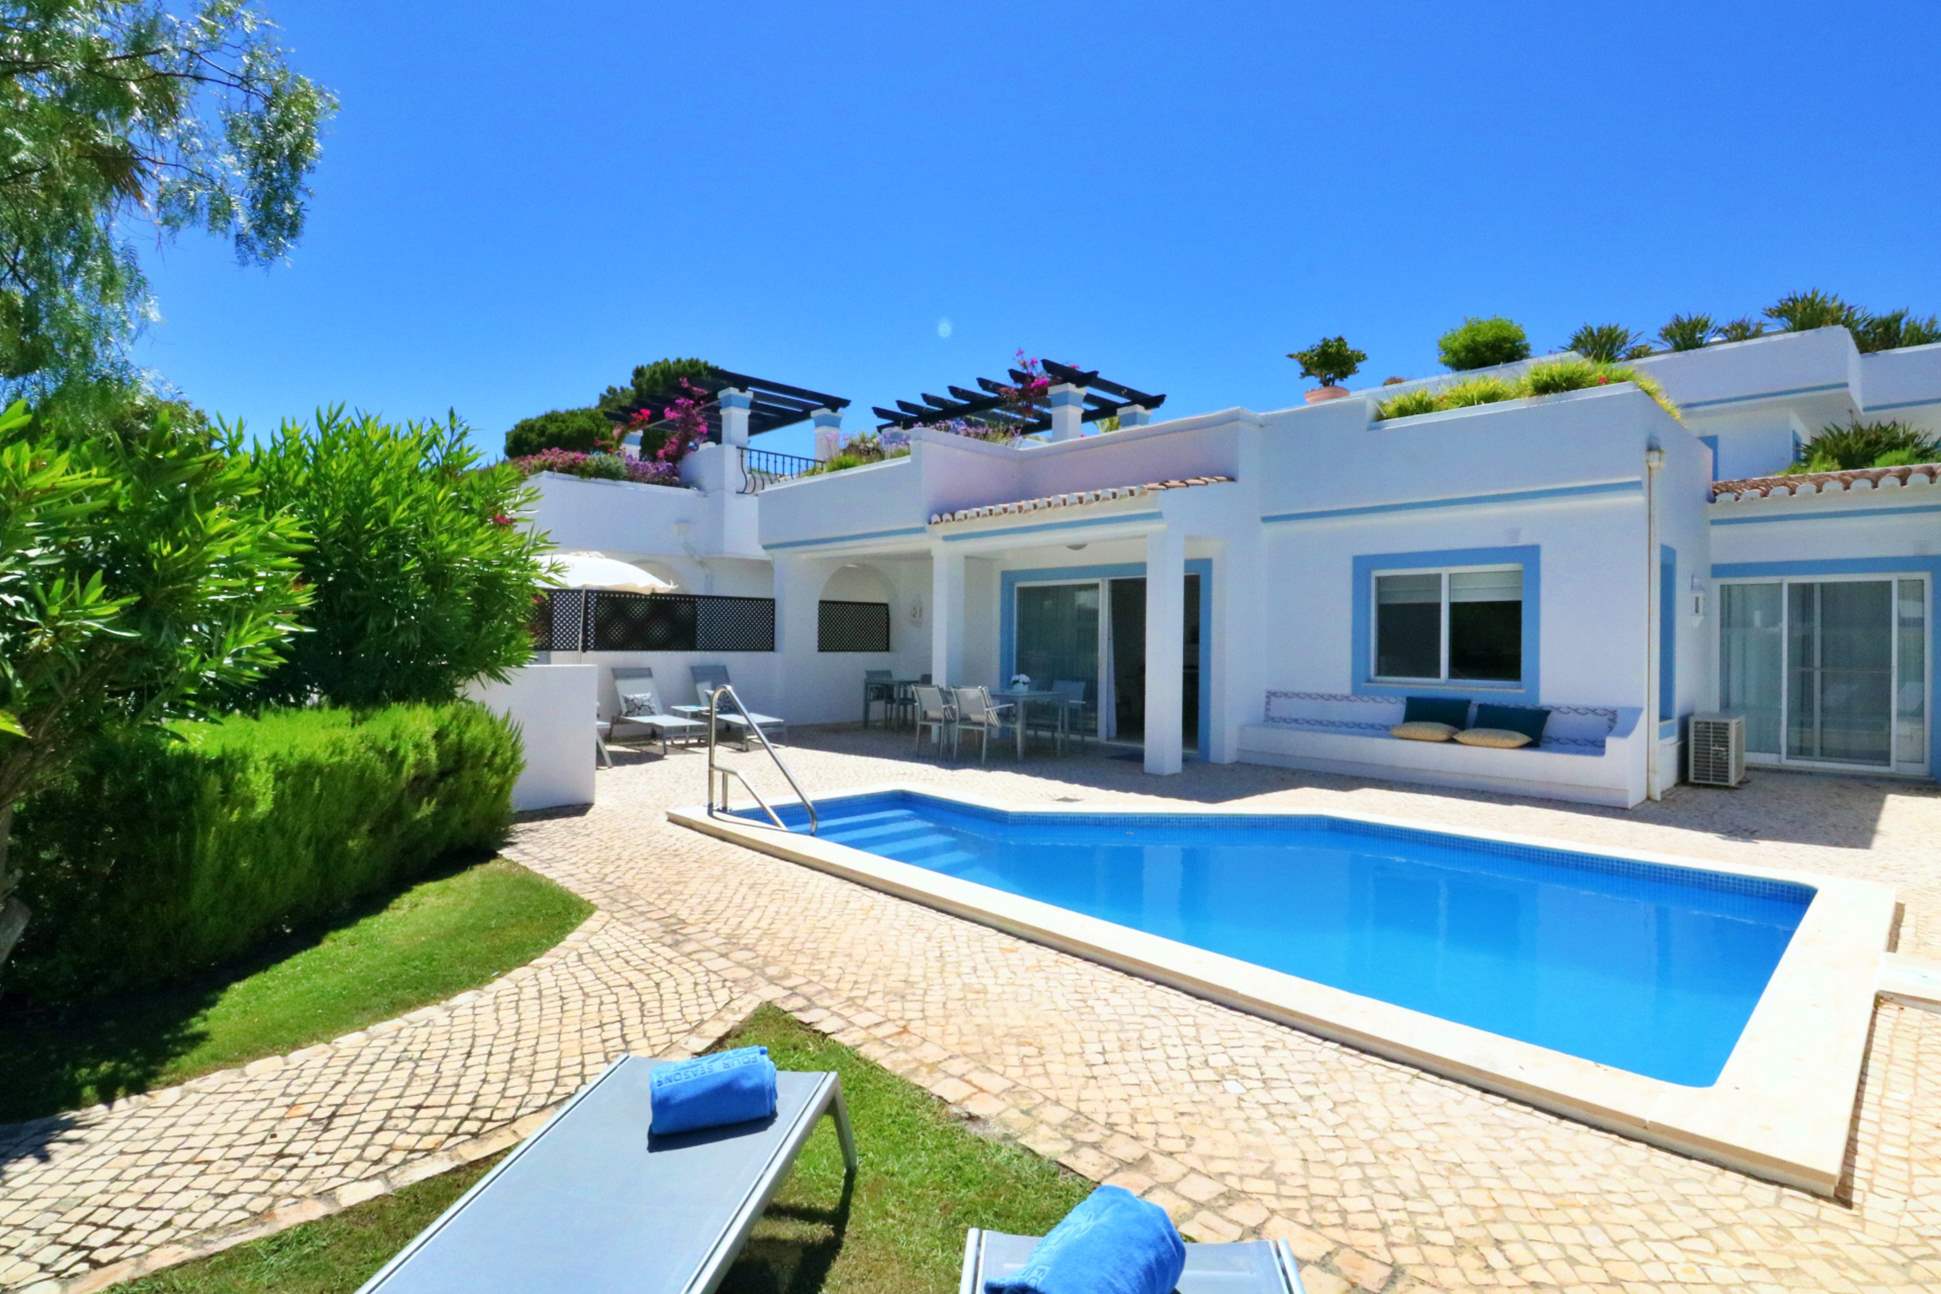 Four Seasons Fairways 2 Bed Hillside Apartment, Sunday Arrival, 2 bedroom villa in Four Seasons Fairways, Algarve